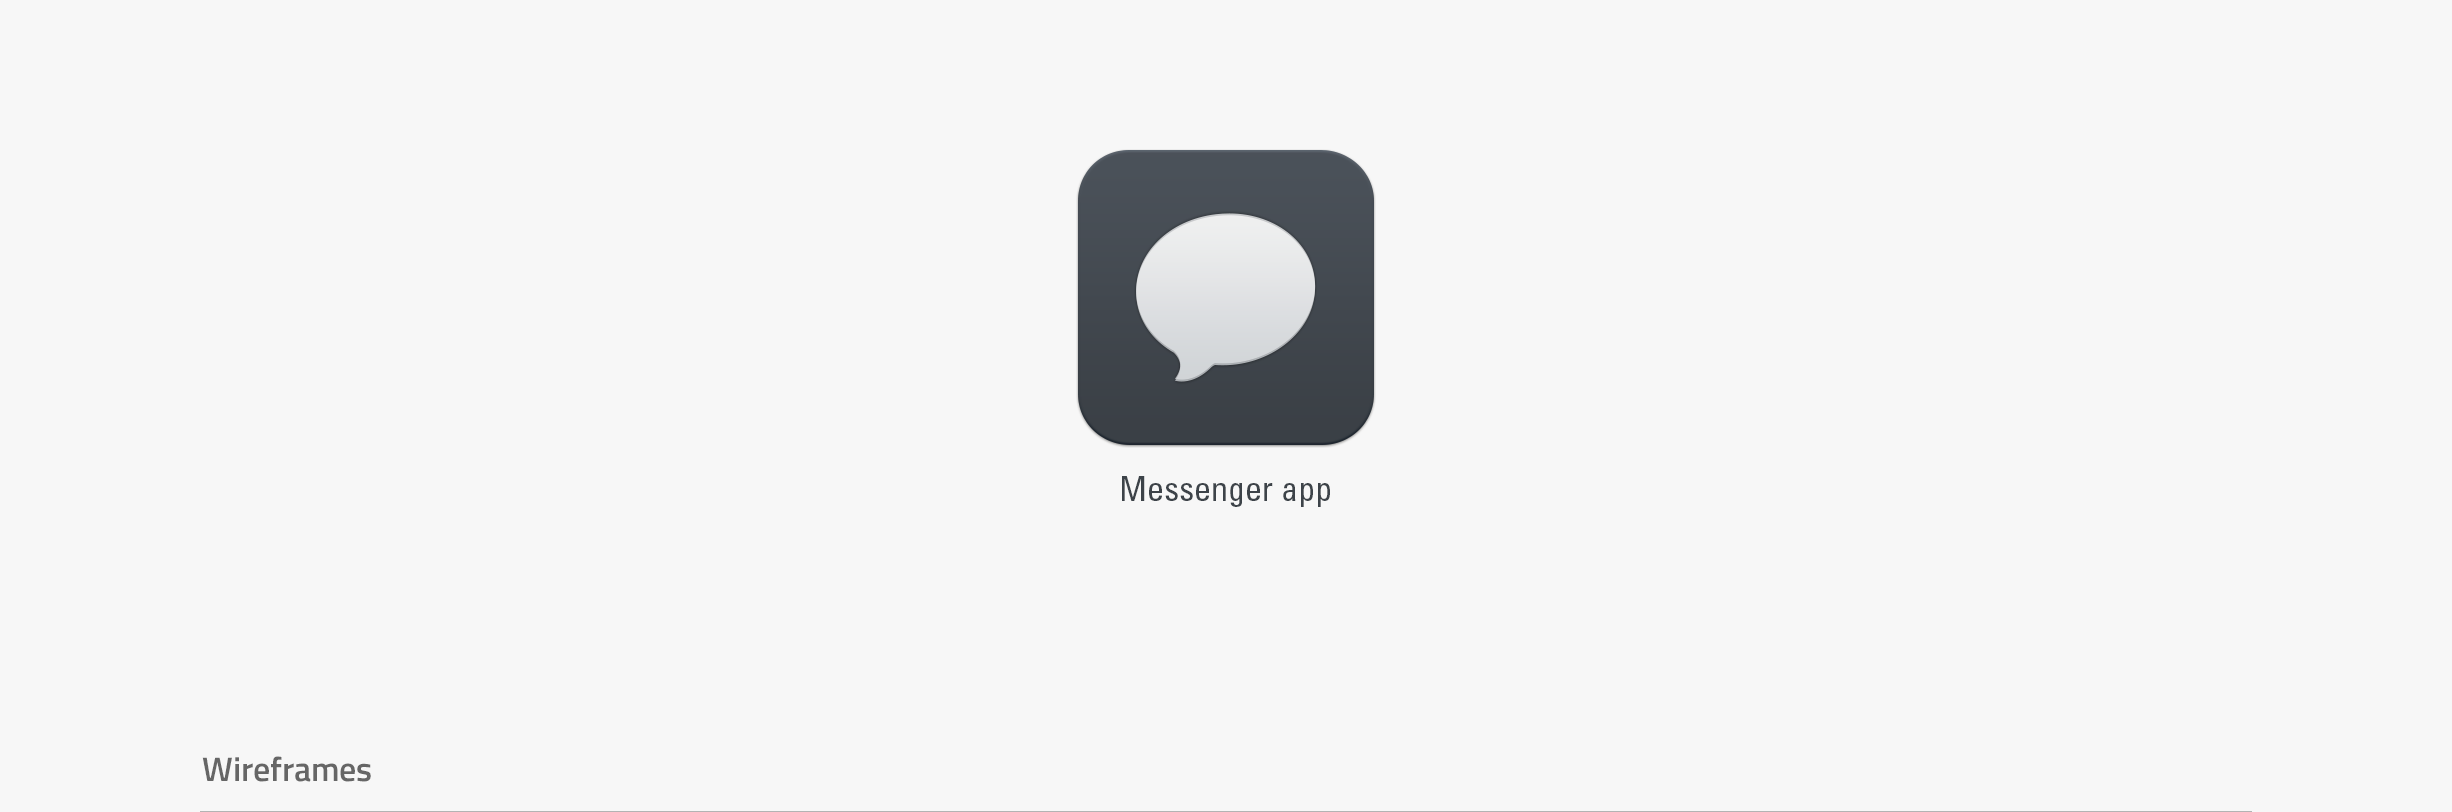 Messenger app - app icon